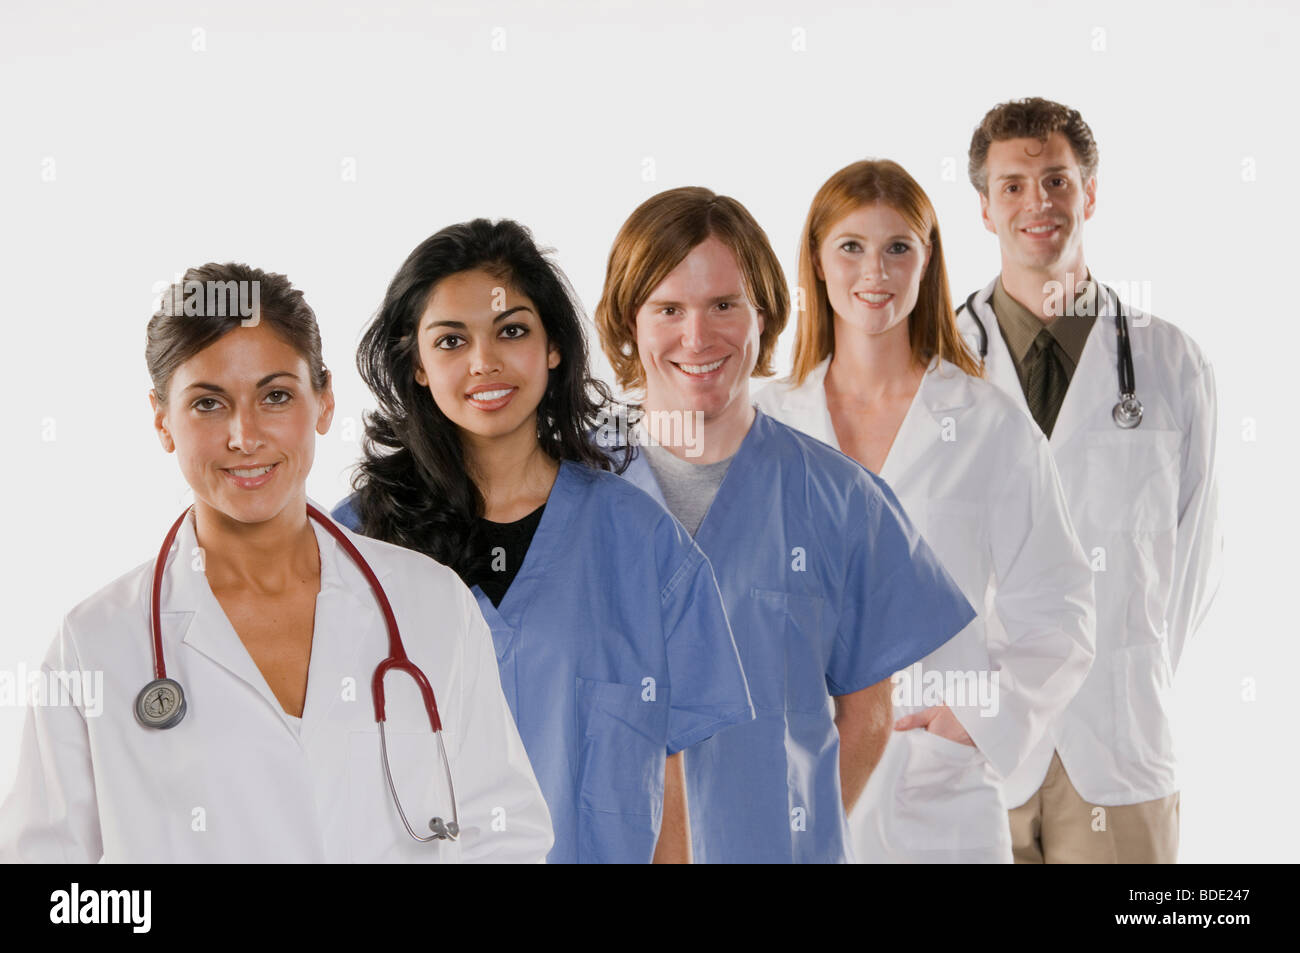 Medical professionals. Stock Photo